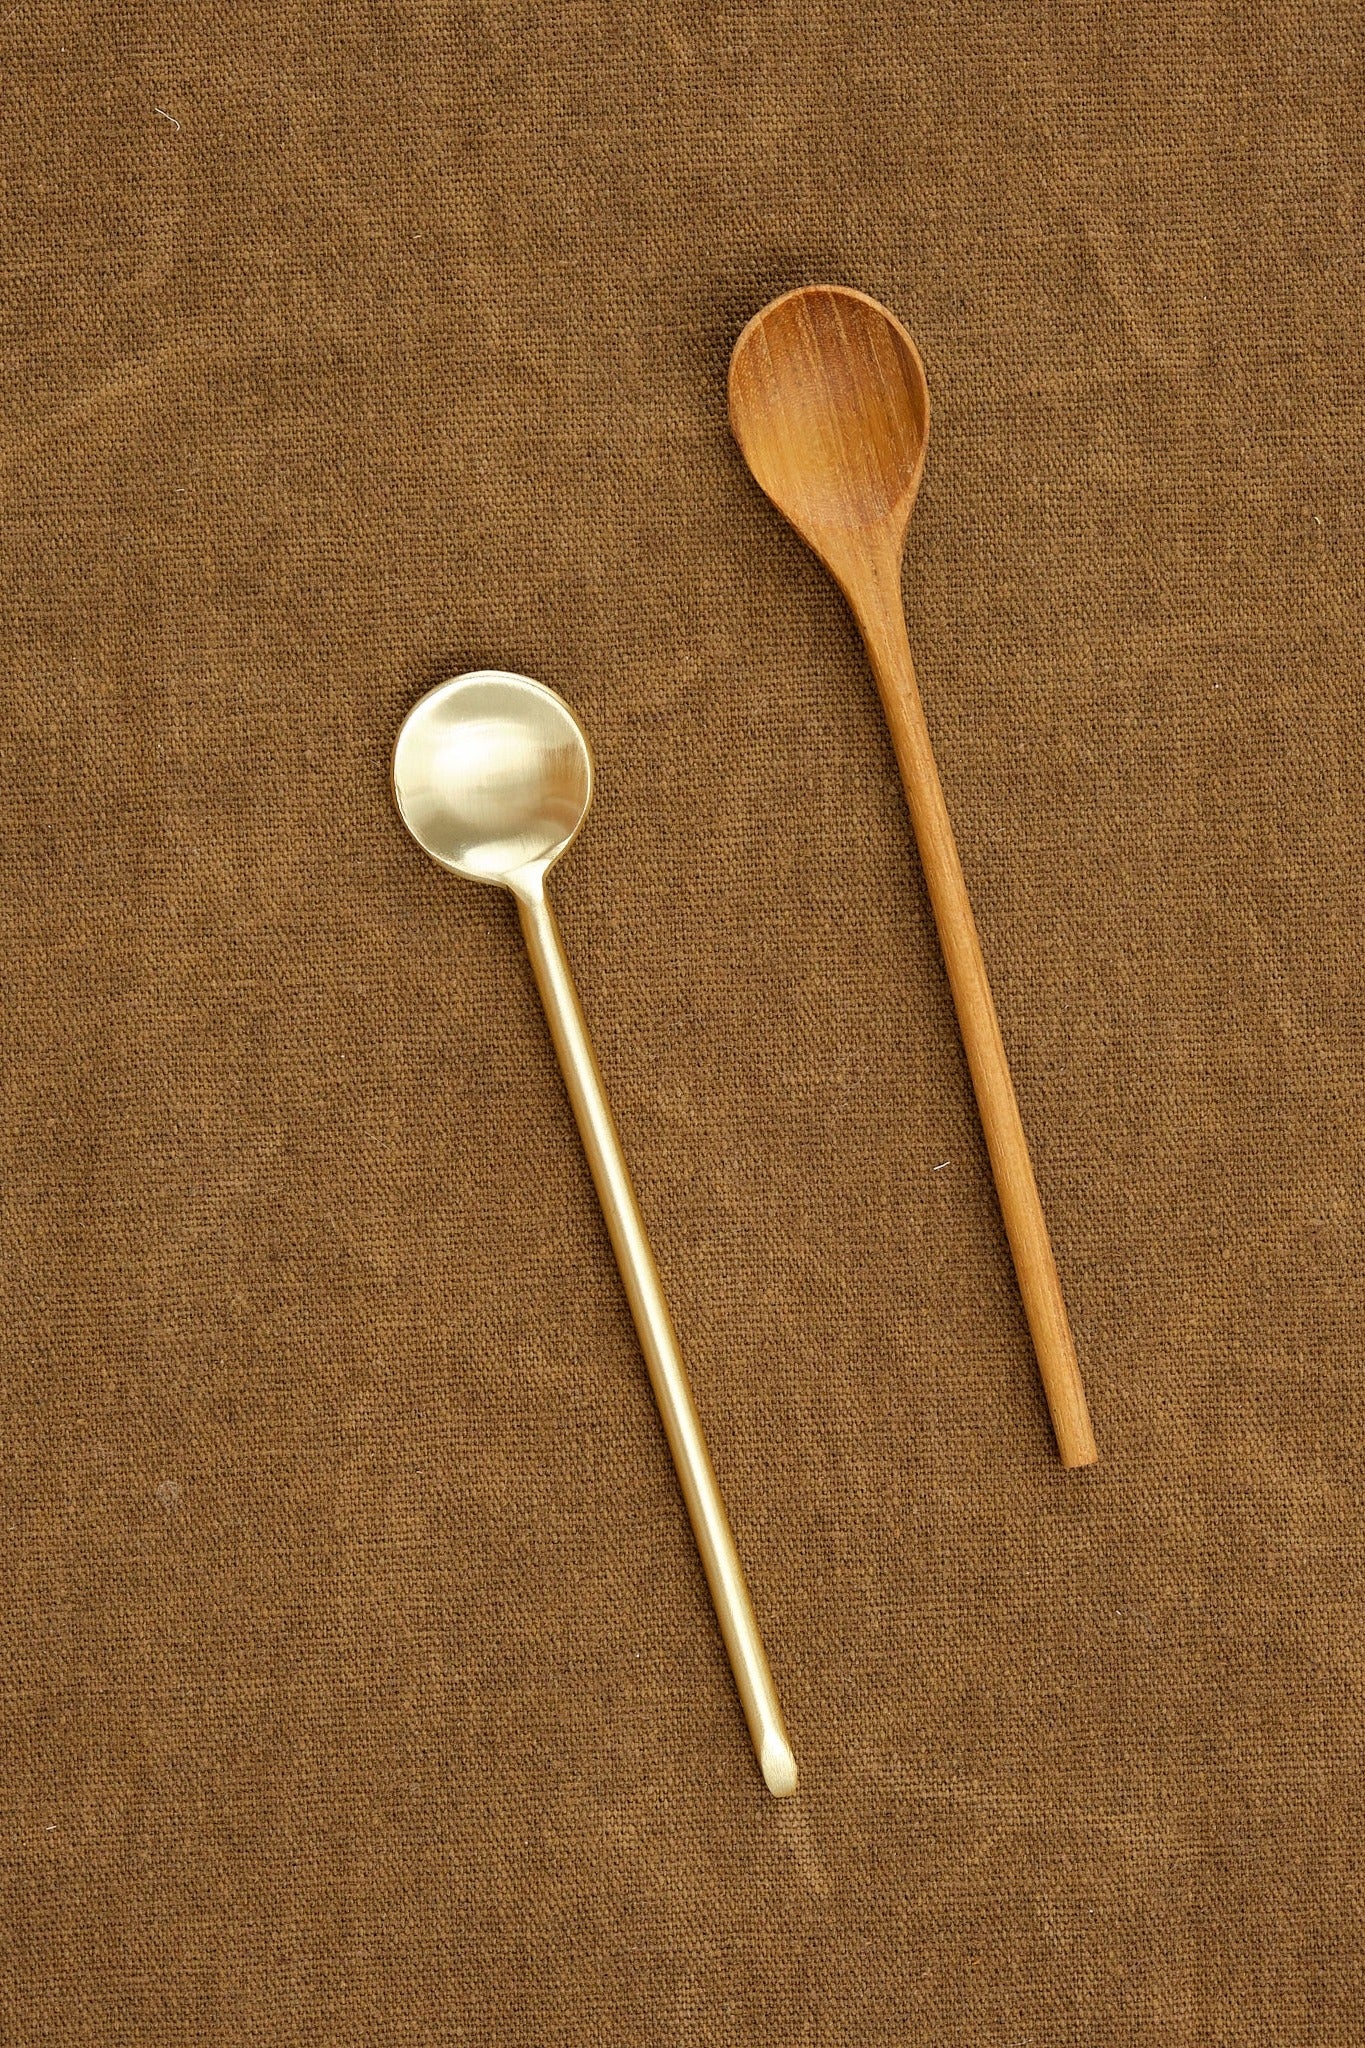 Be Home Thin Spoon in teak